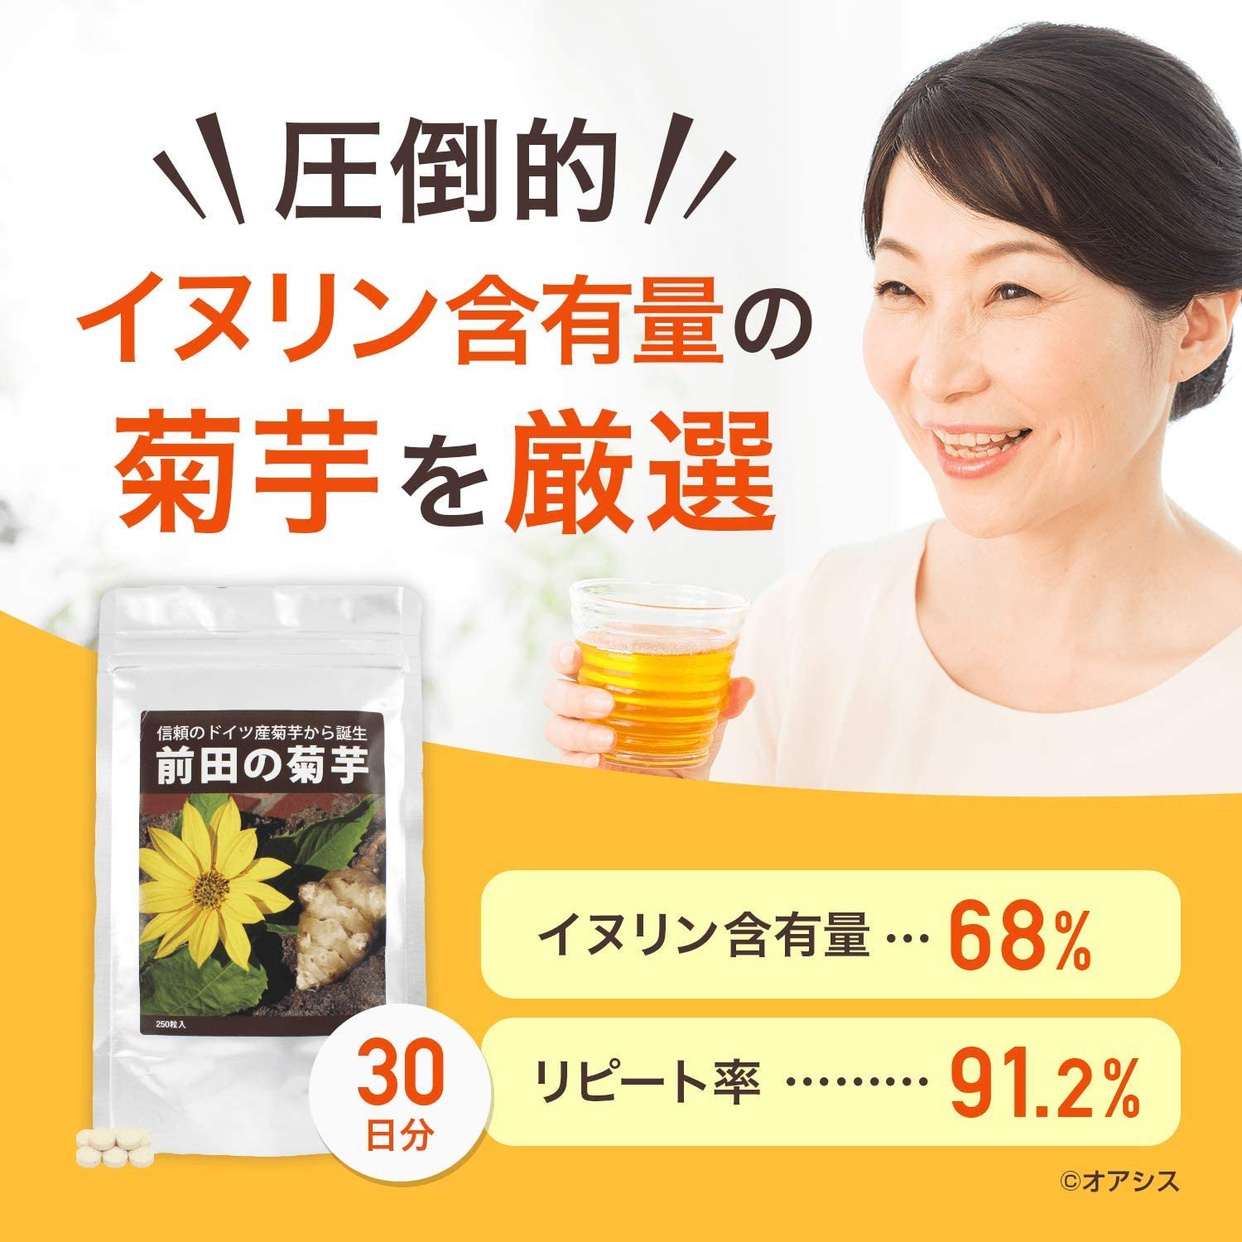 OASIS(オアシス) 前田の菊芋の商品画像サムネ2 